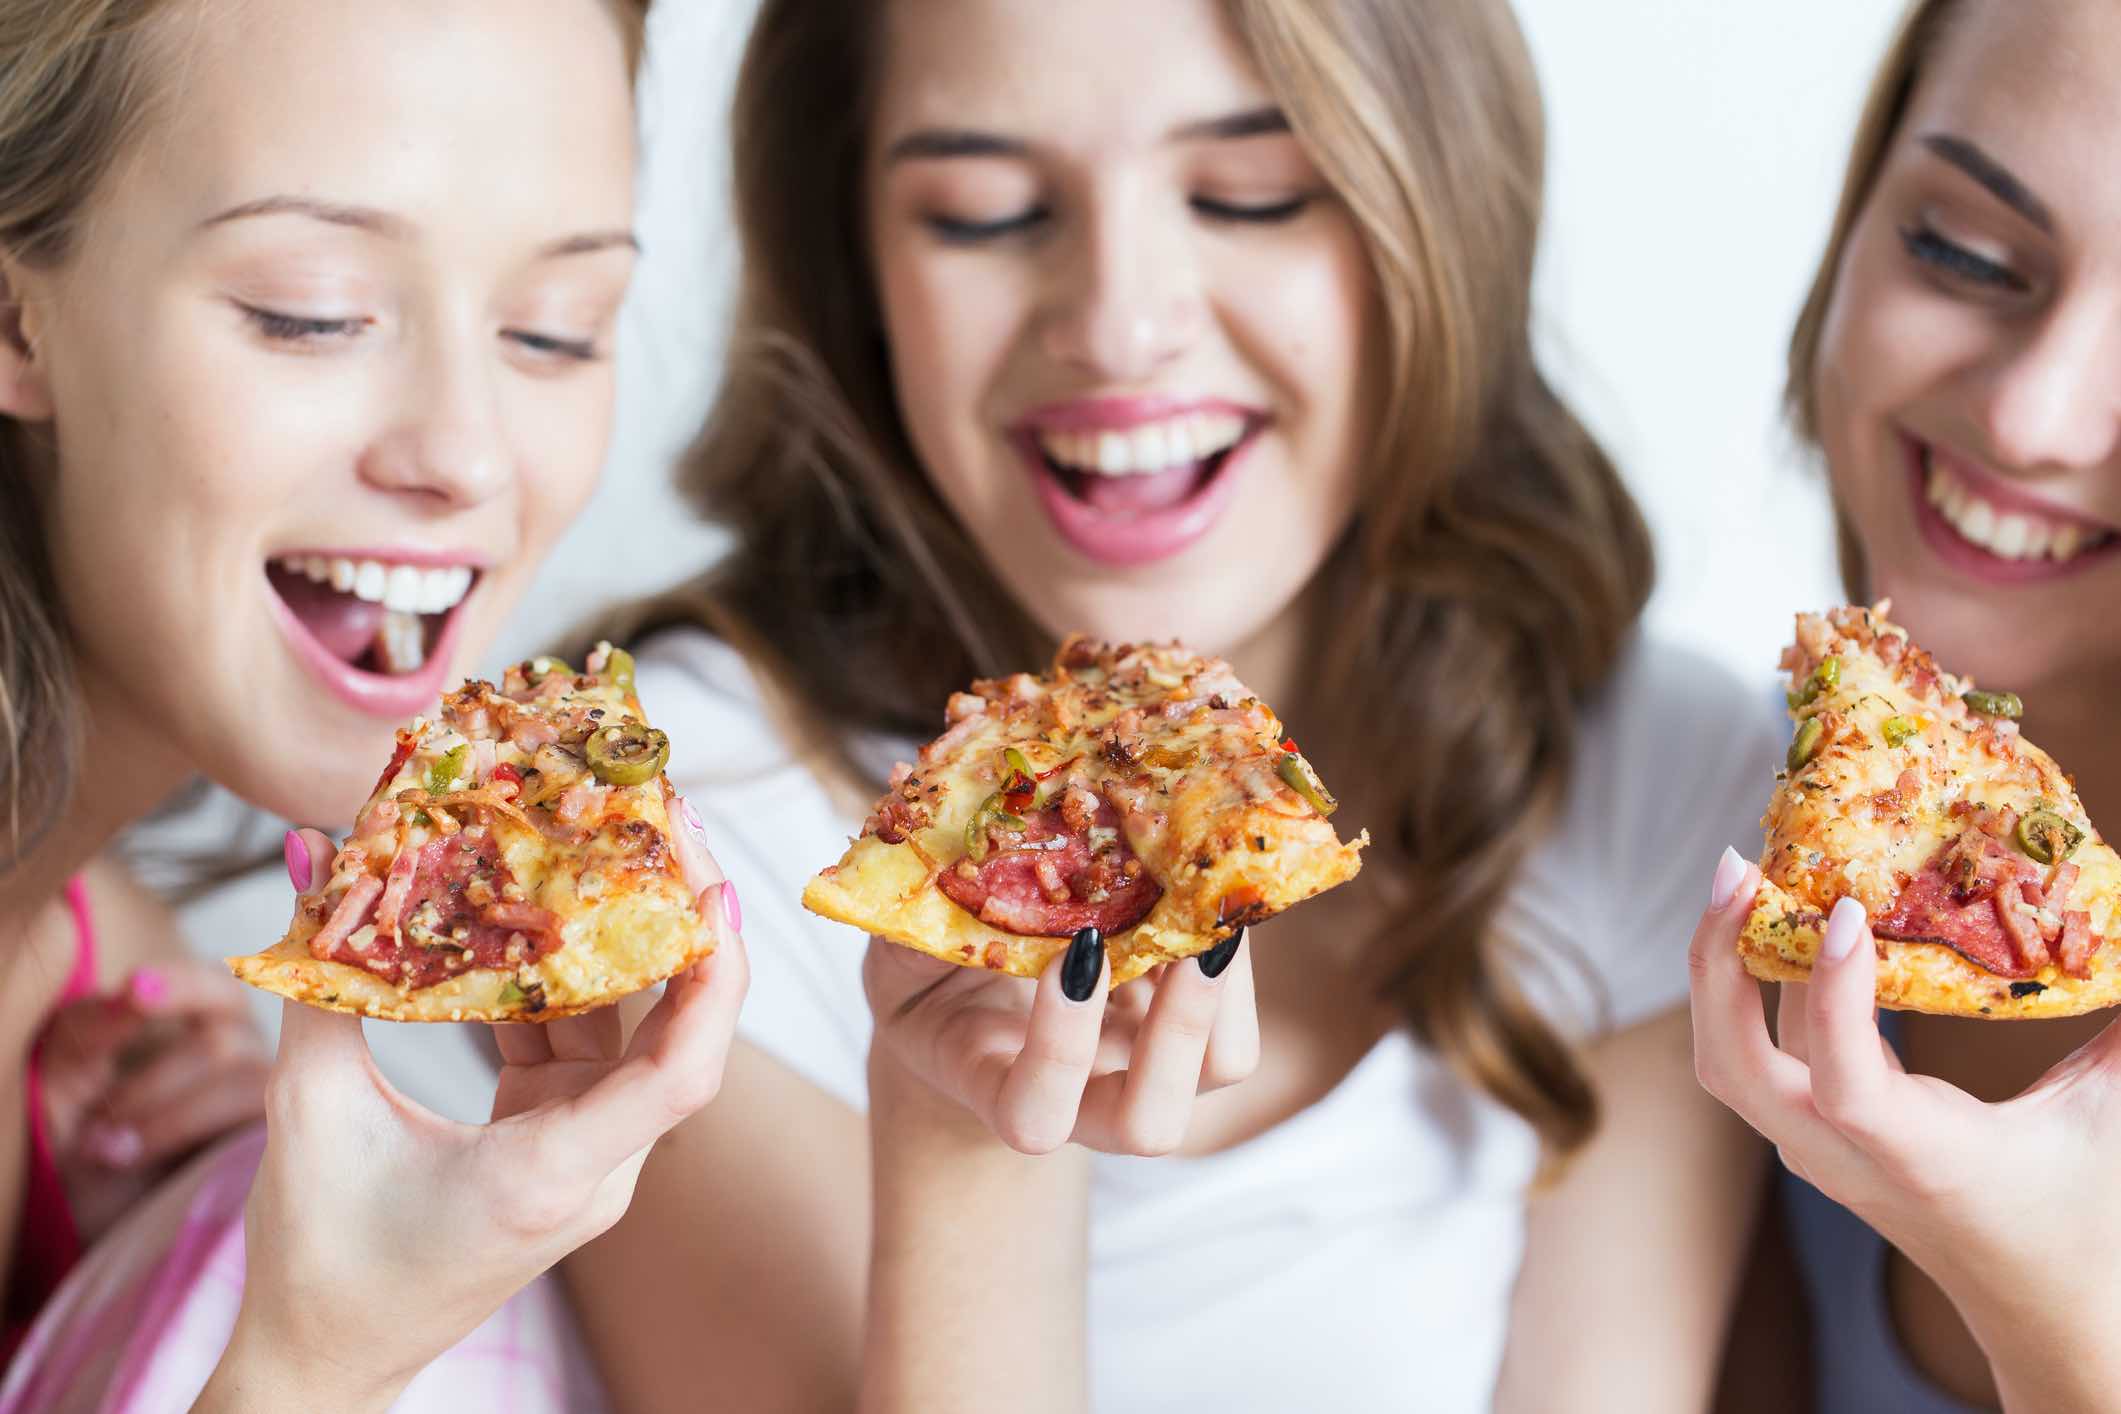 girls-eating-pizza-together